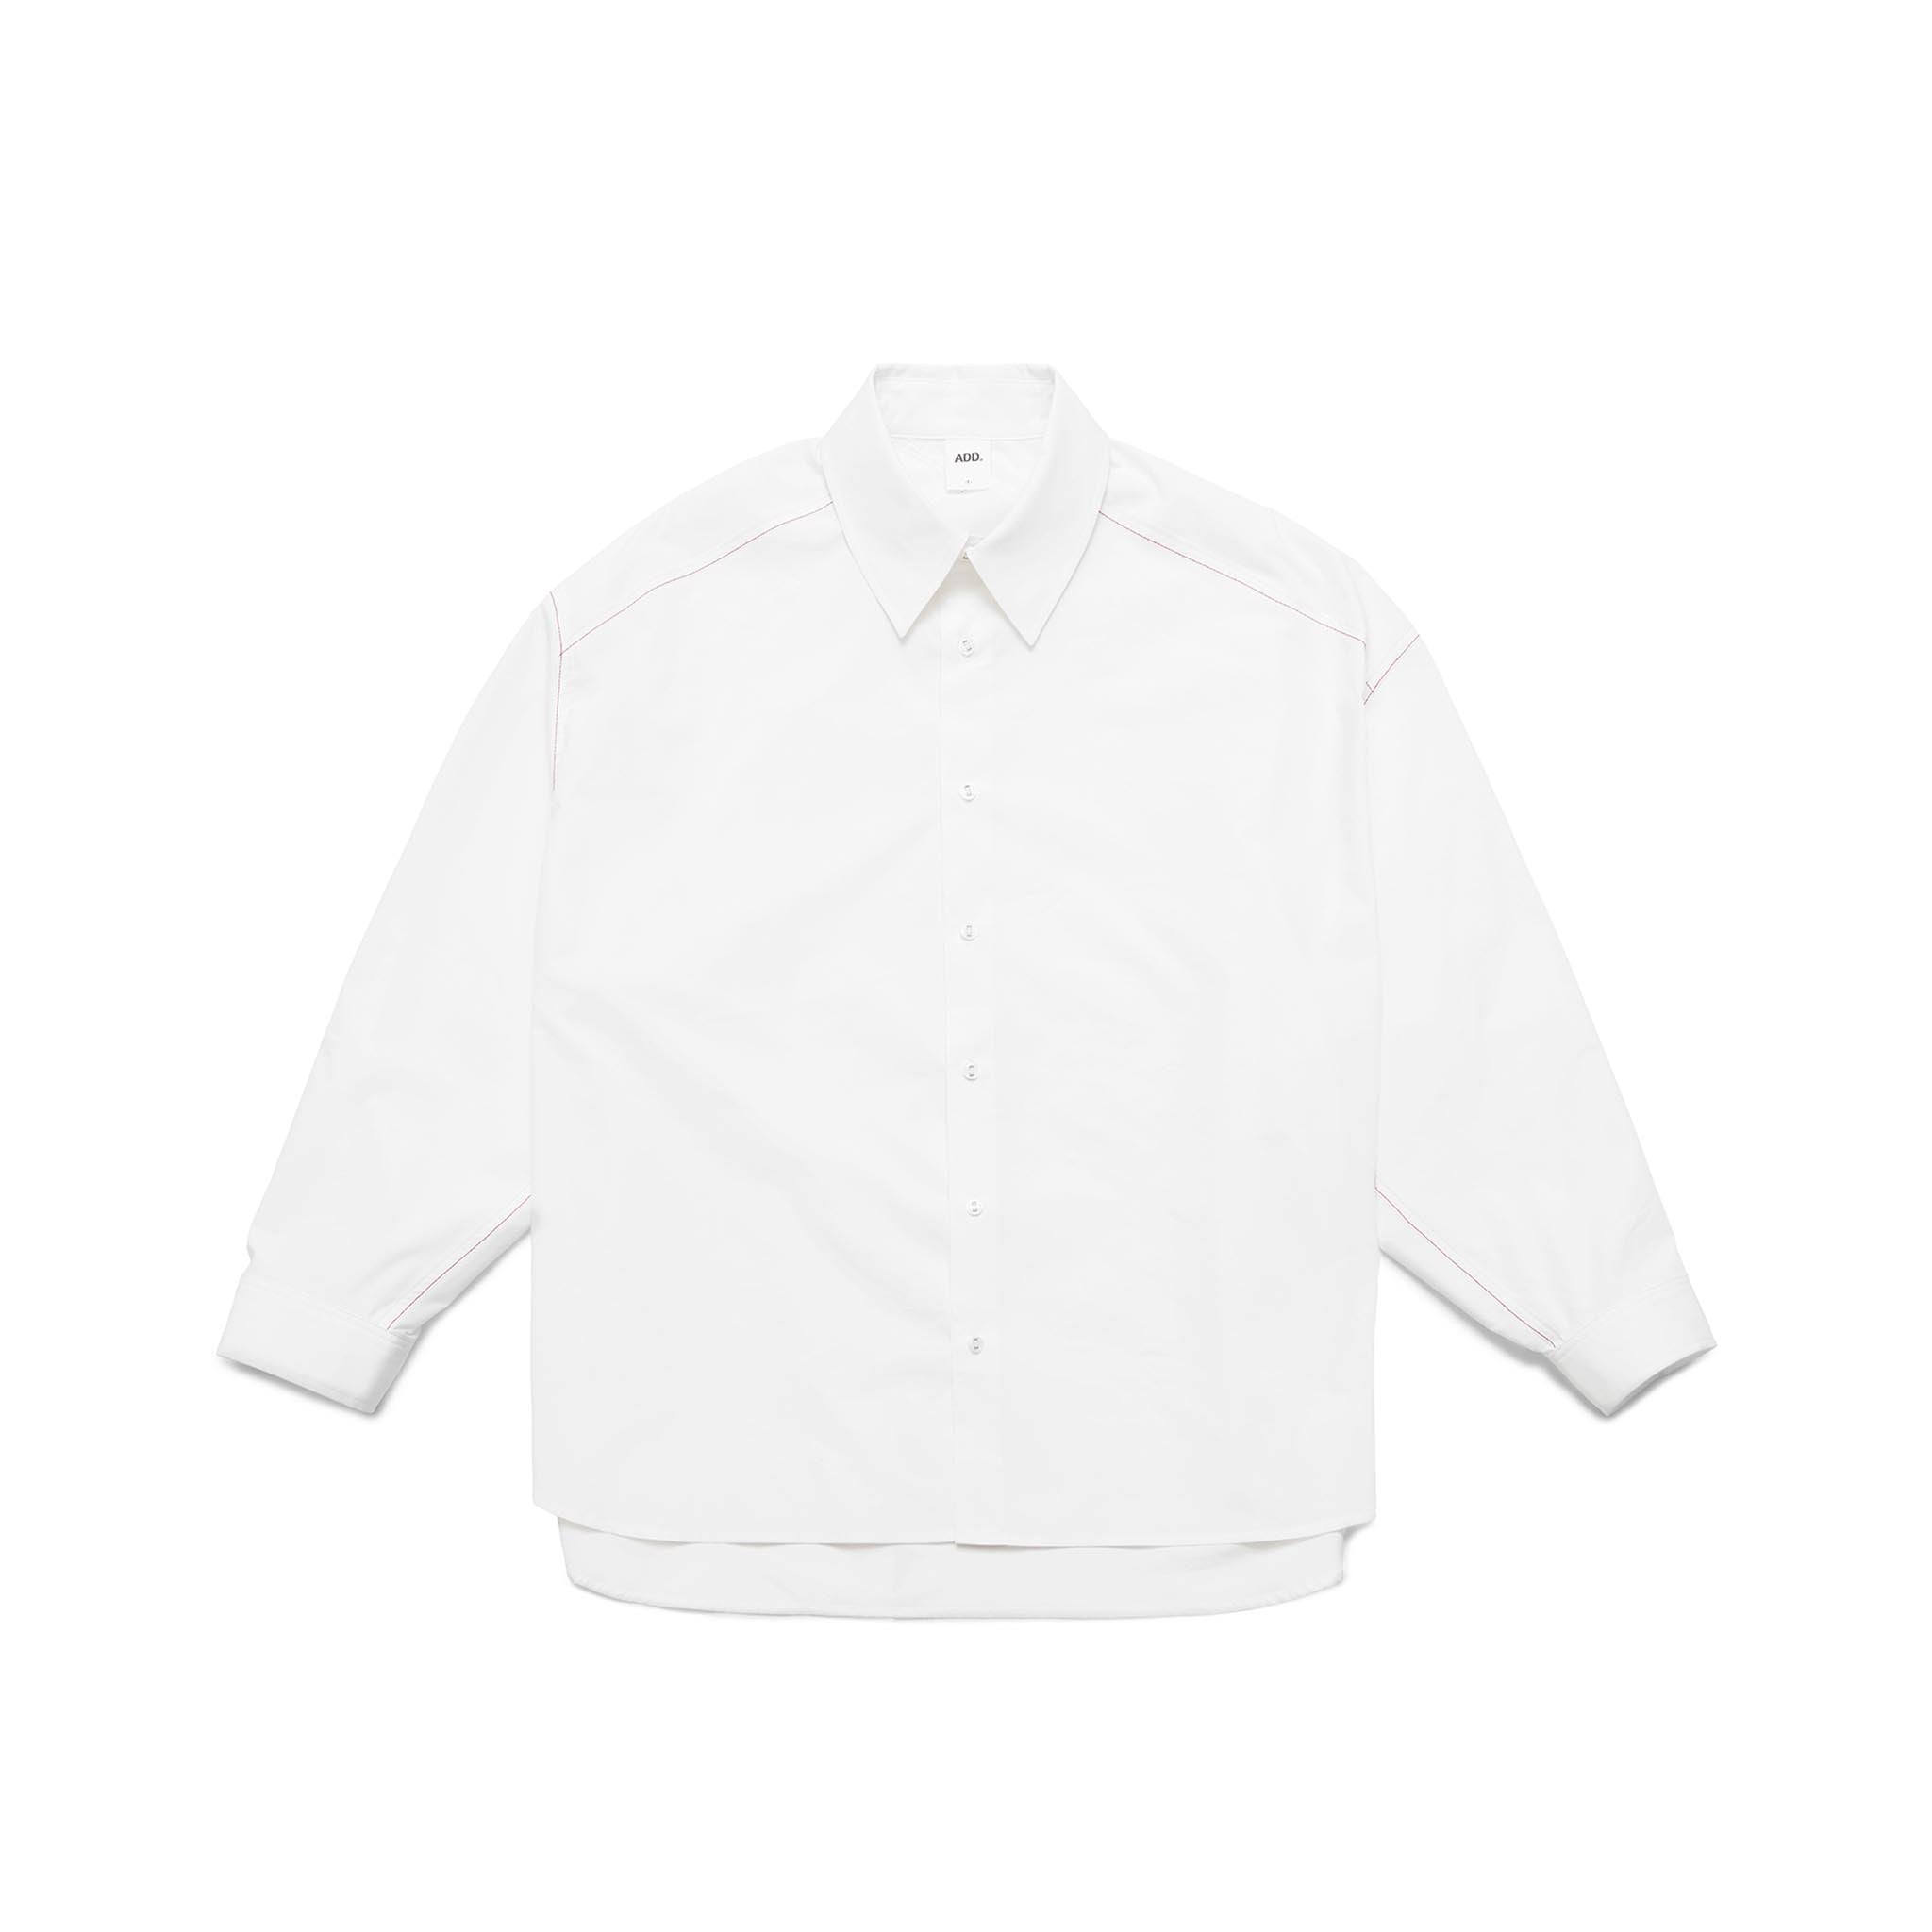 ADD Cutout Stitch Avantgarde Shirt White